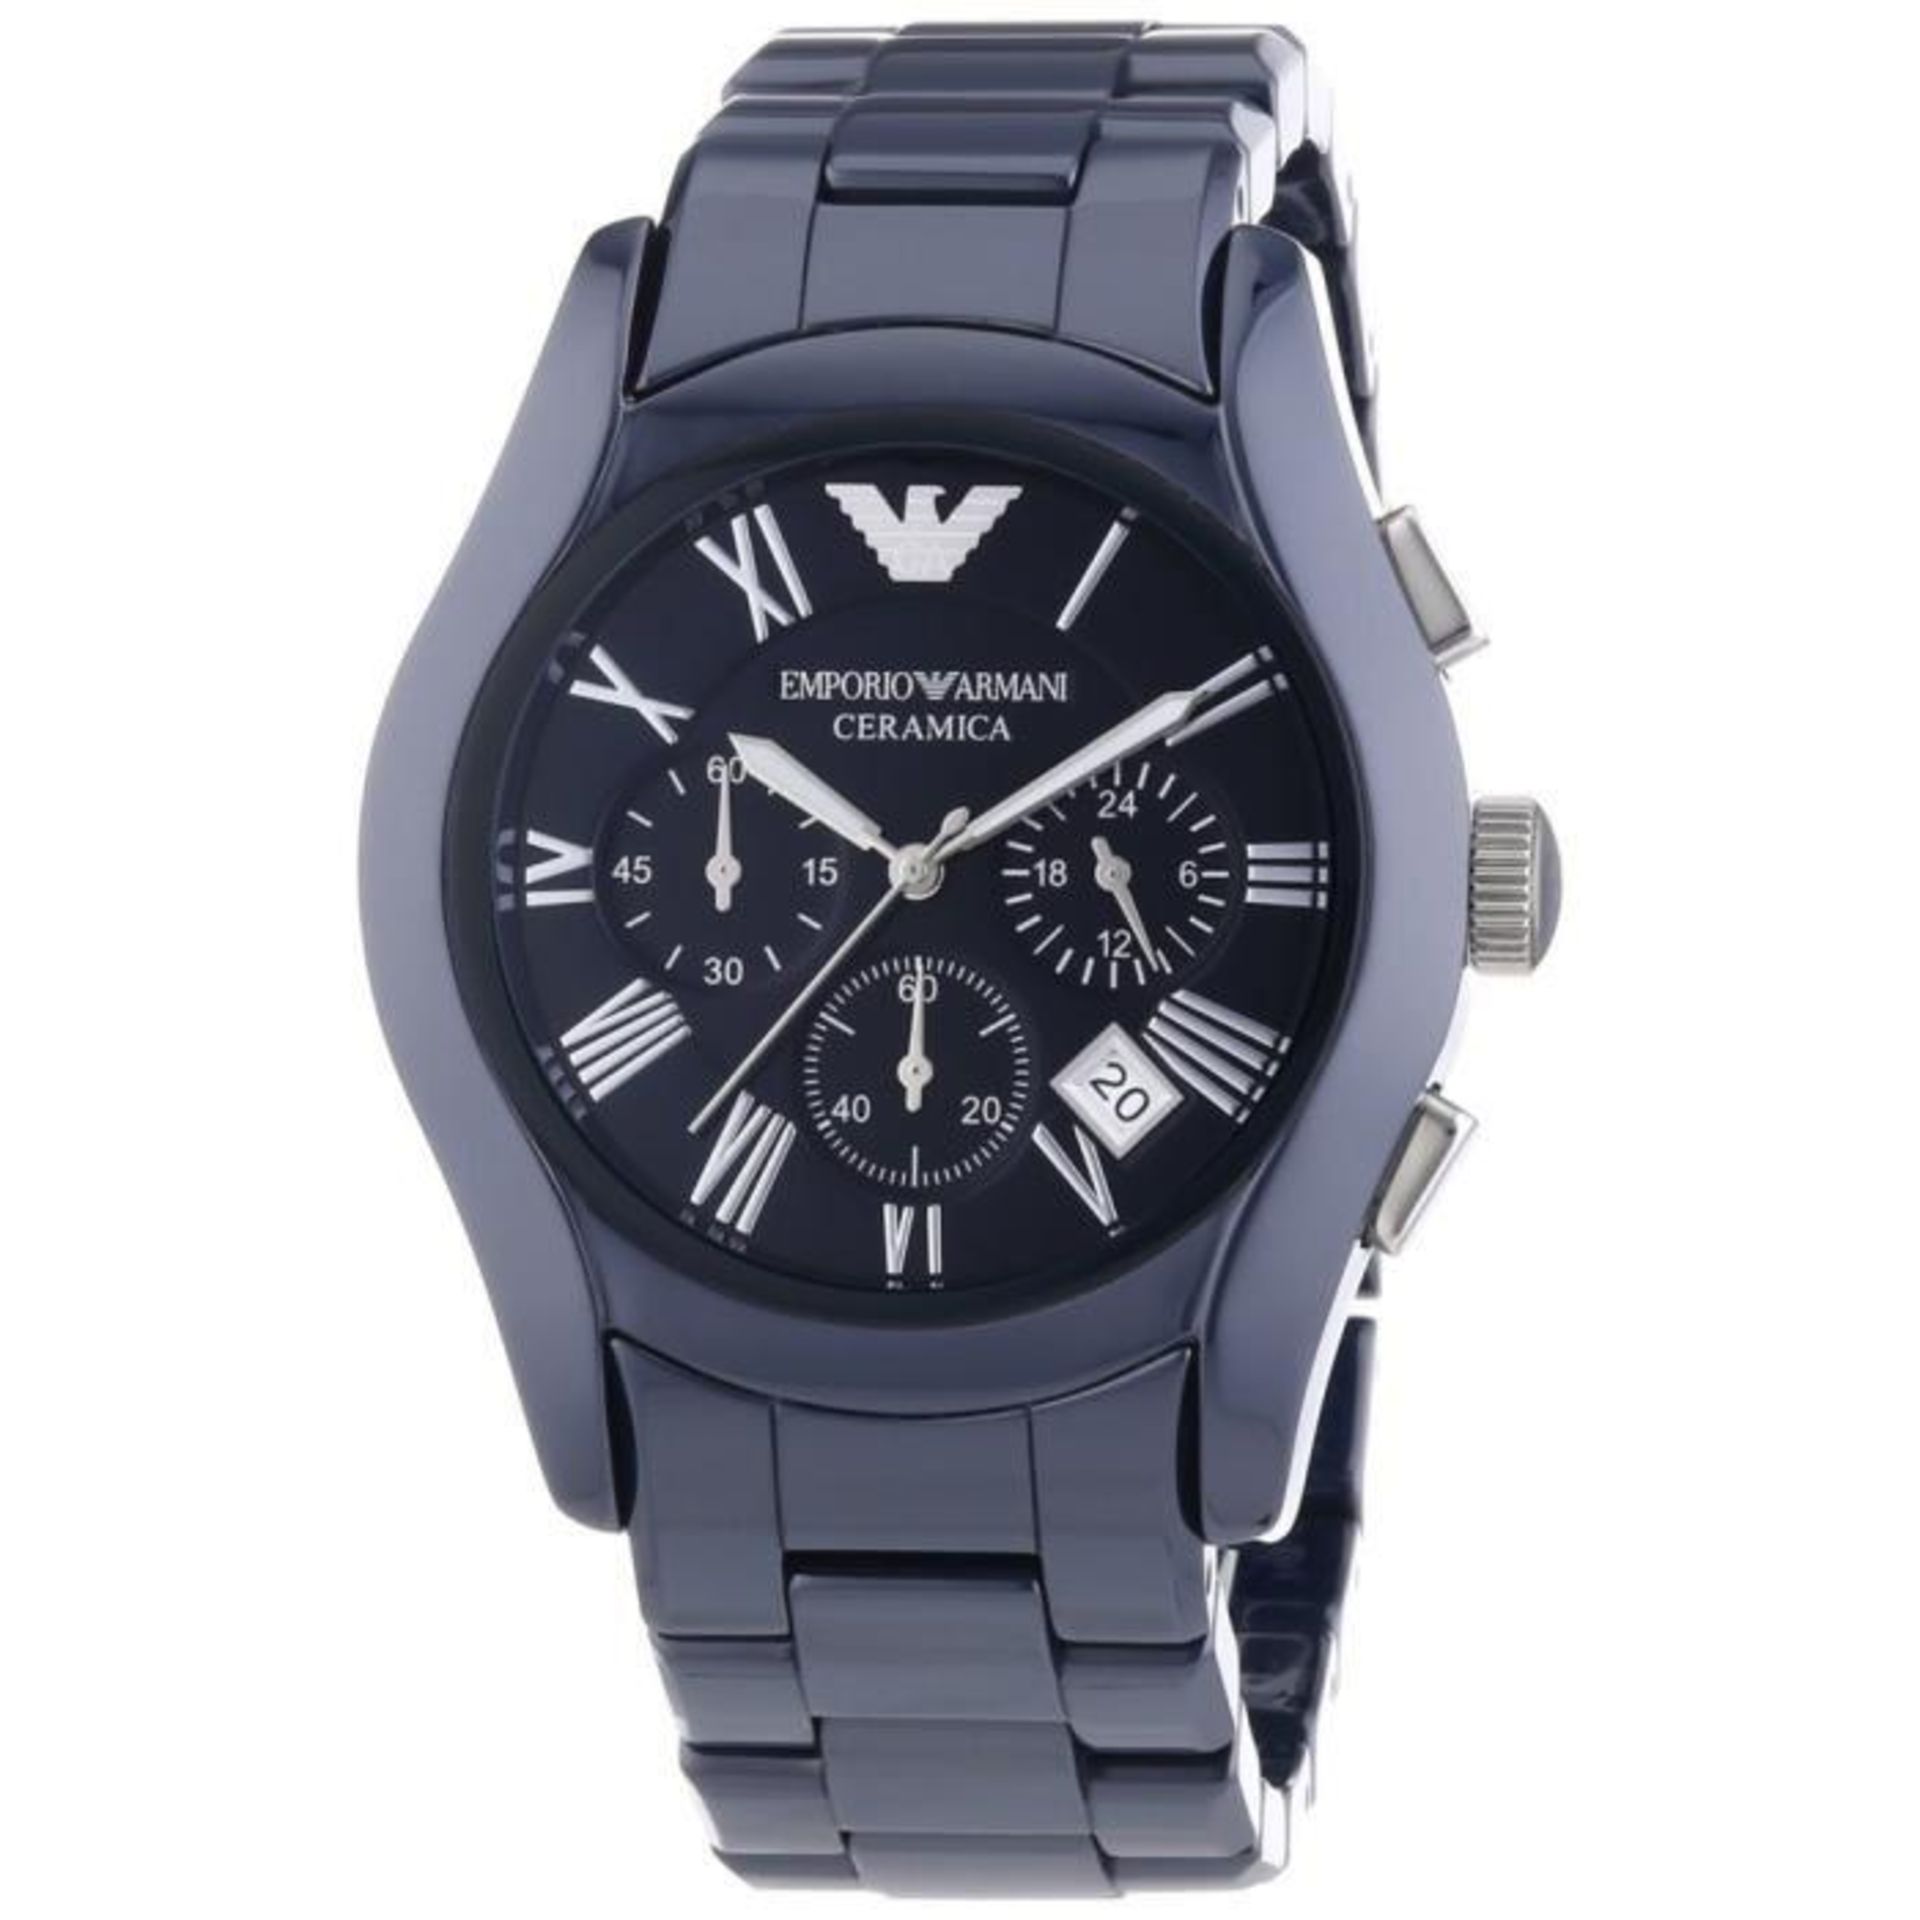 TOTAL RRP £399 Emporio Armani Ceramica Wrist Watch model number AR1469